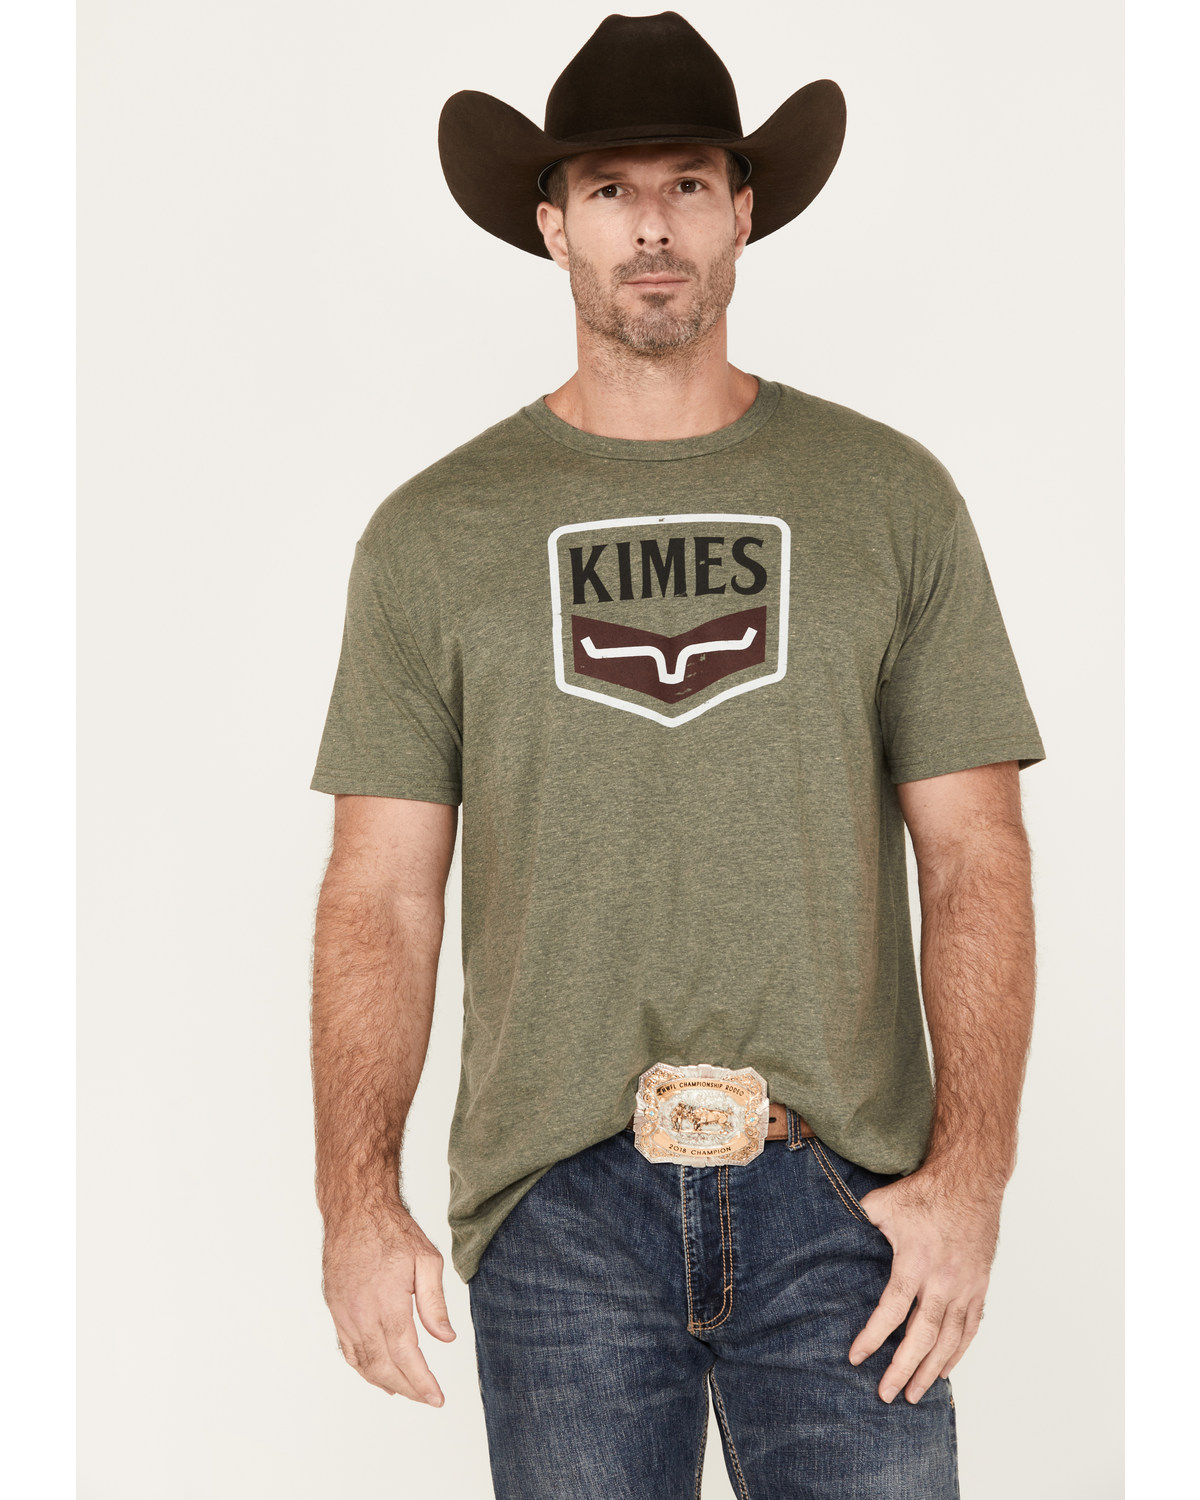 Kimes Ranch Men's Boot Barn Exclusive Players Short Sleeve T-Shirt